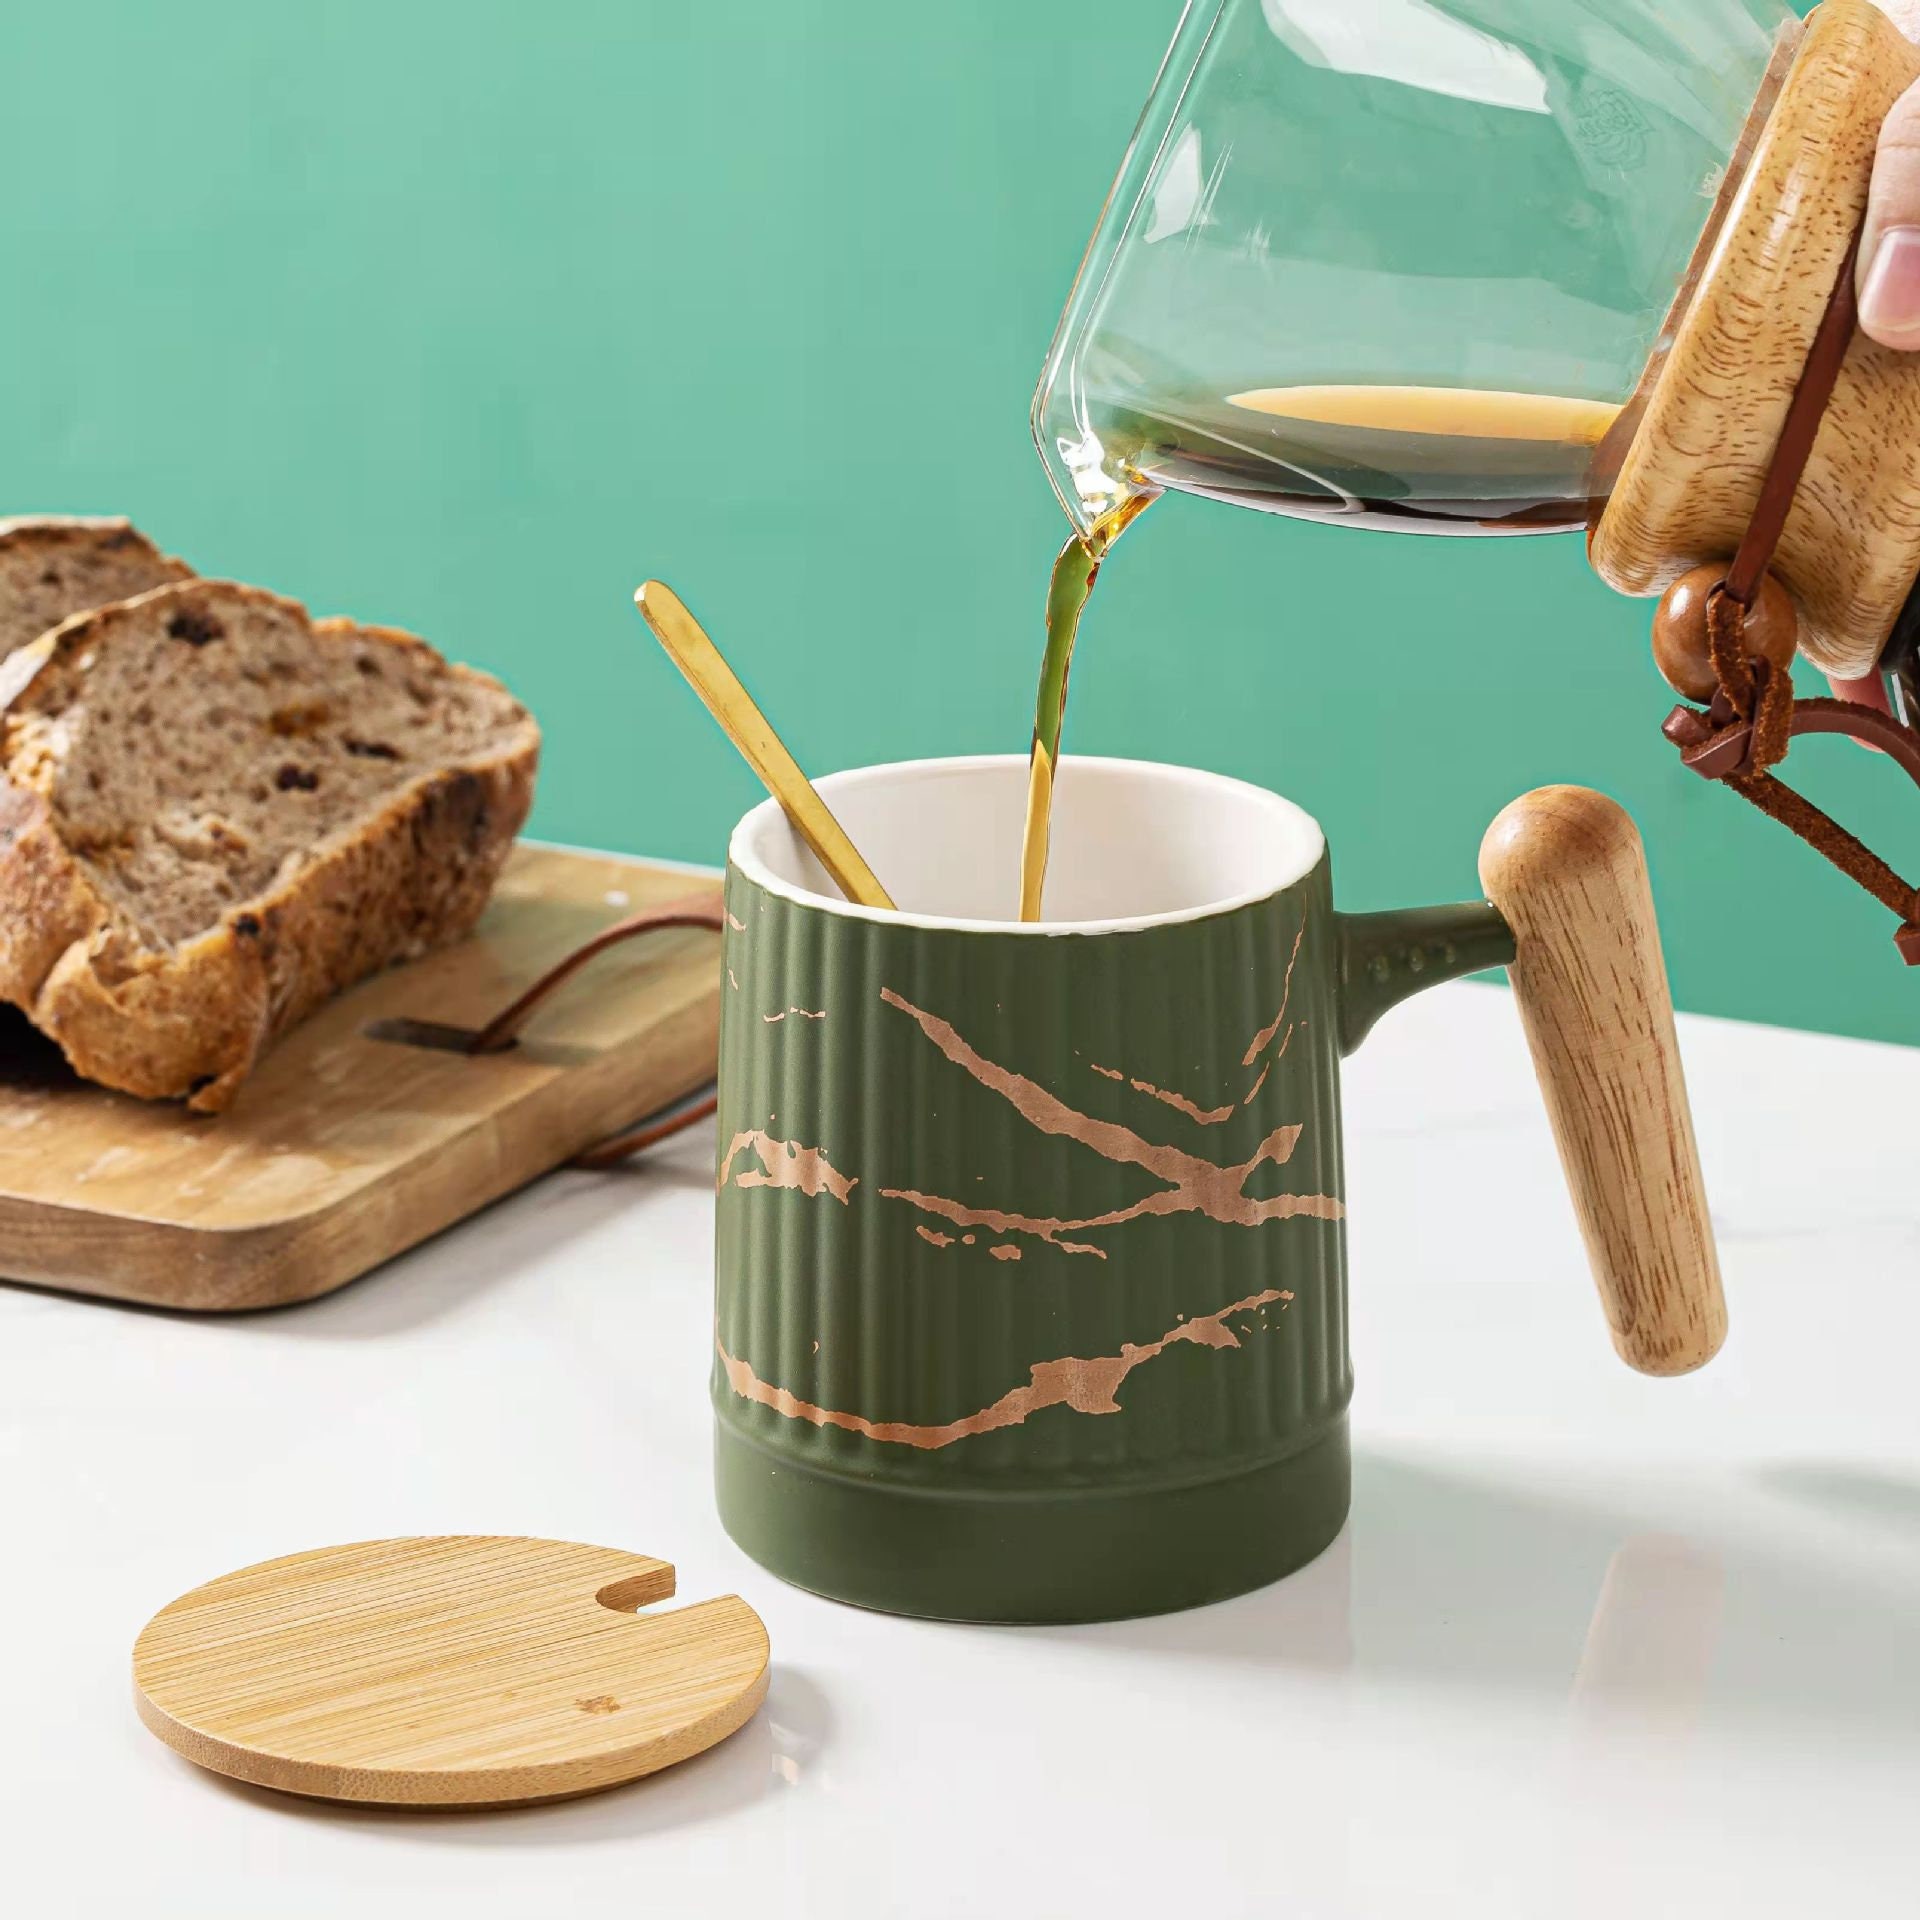 Minimalist Style Mug with Spoon Lid – Grand Prix Coffee